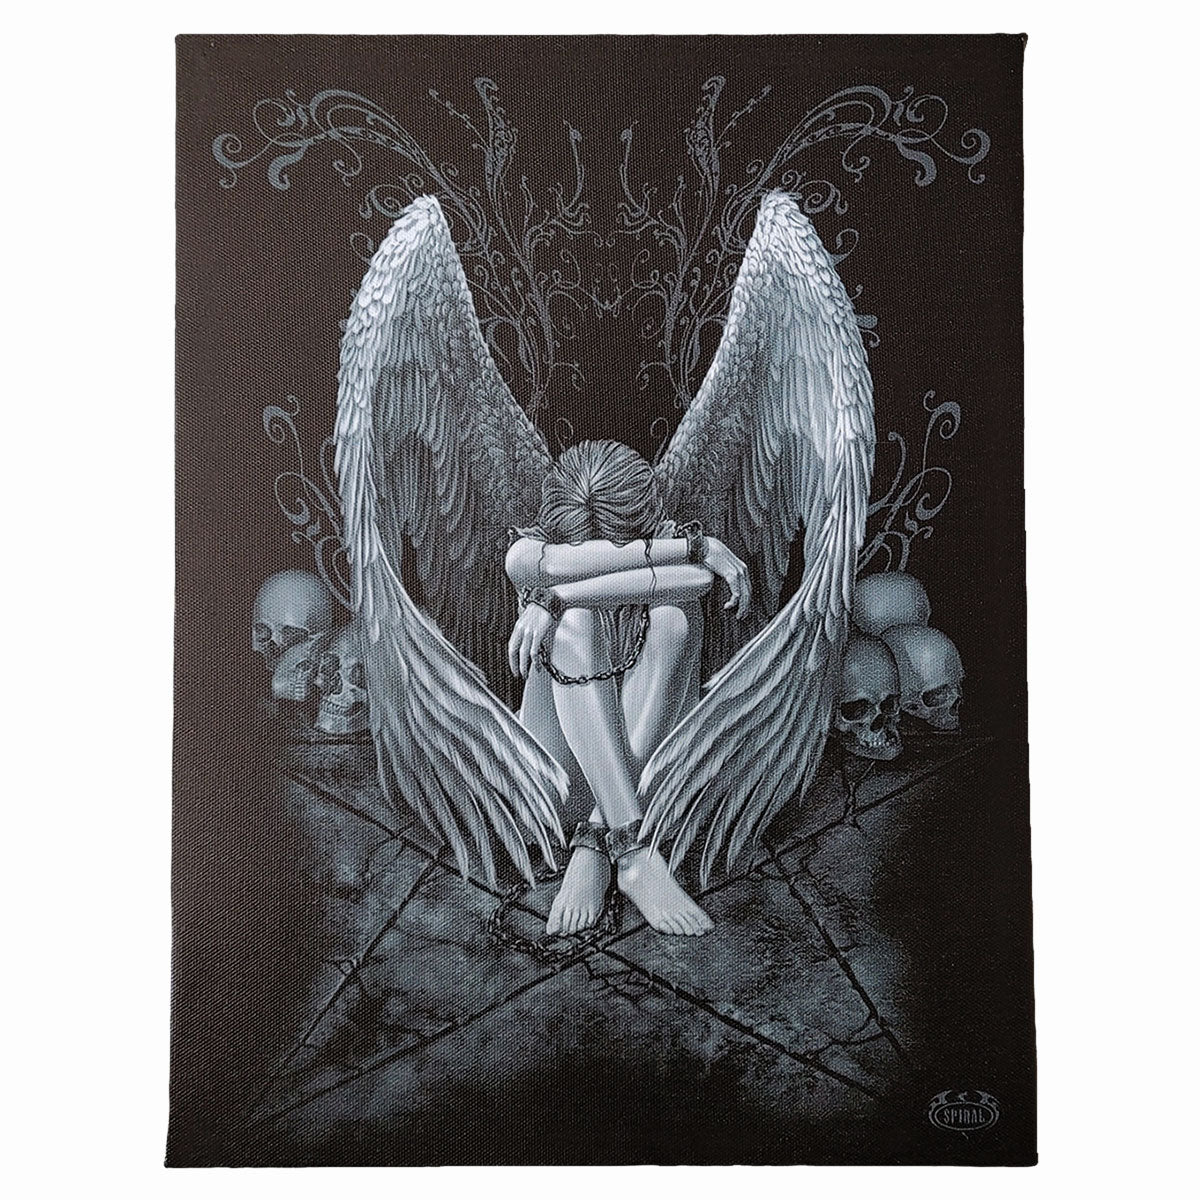 ENSLAVED ANGEL - Canvas Poster 25x19cm